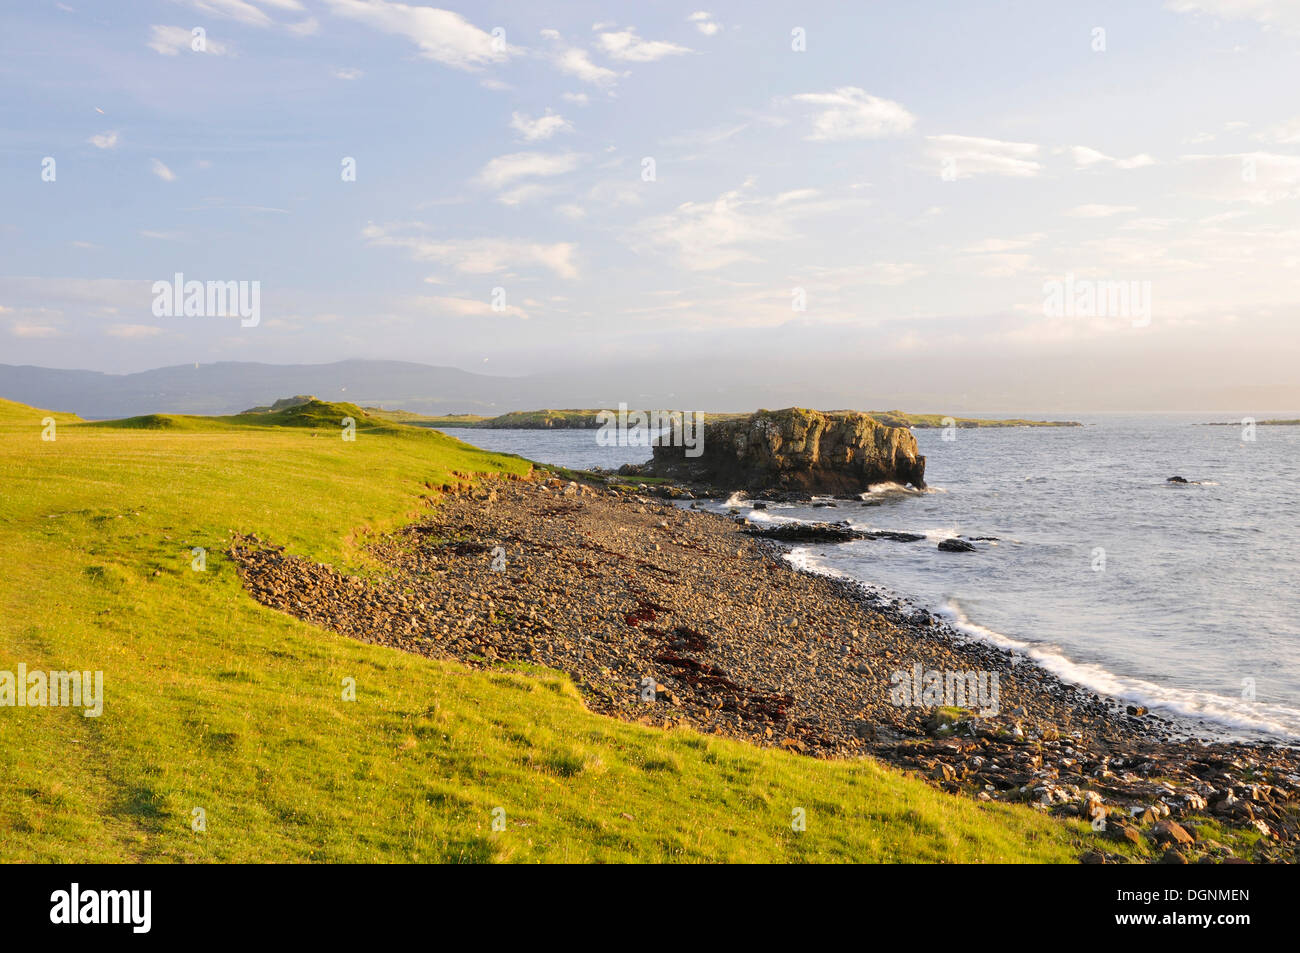 Coastal landscape with rocks in the evening light, Schottland, Isle of Skye, Scotland, United Kingdom Stock Photo